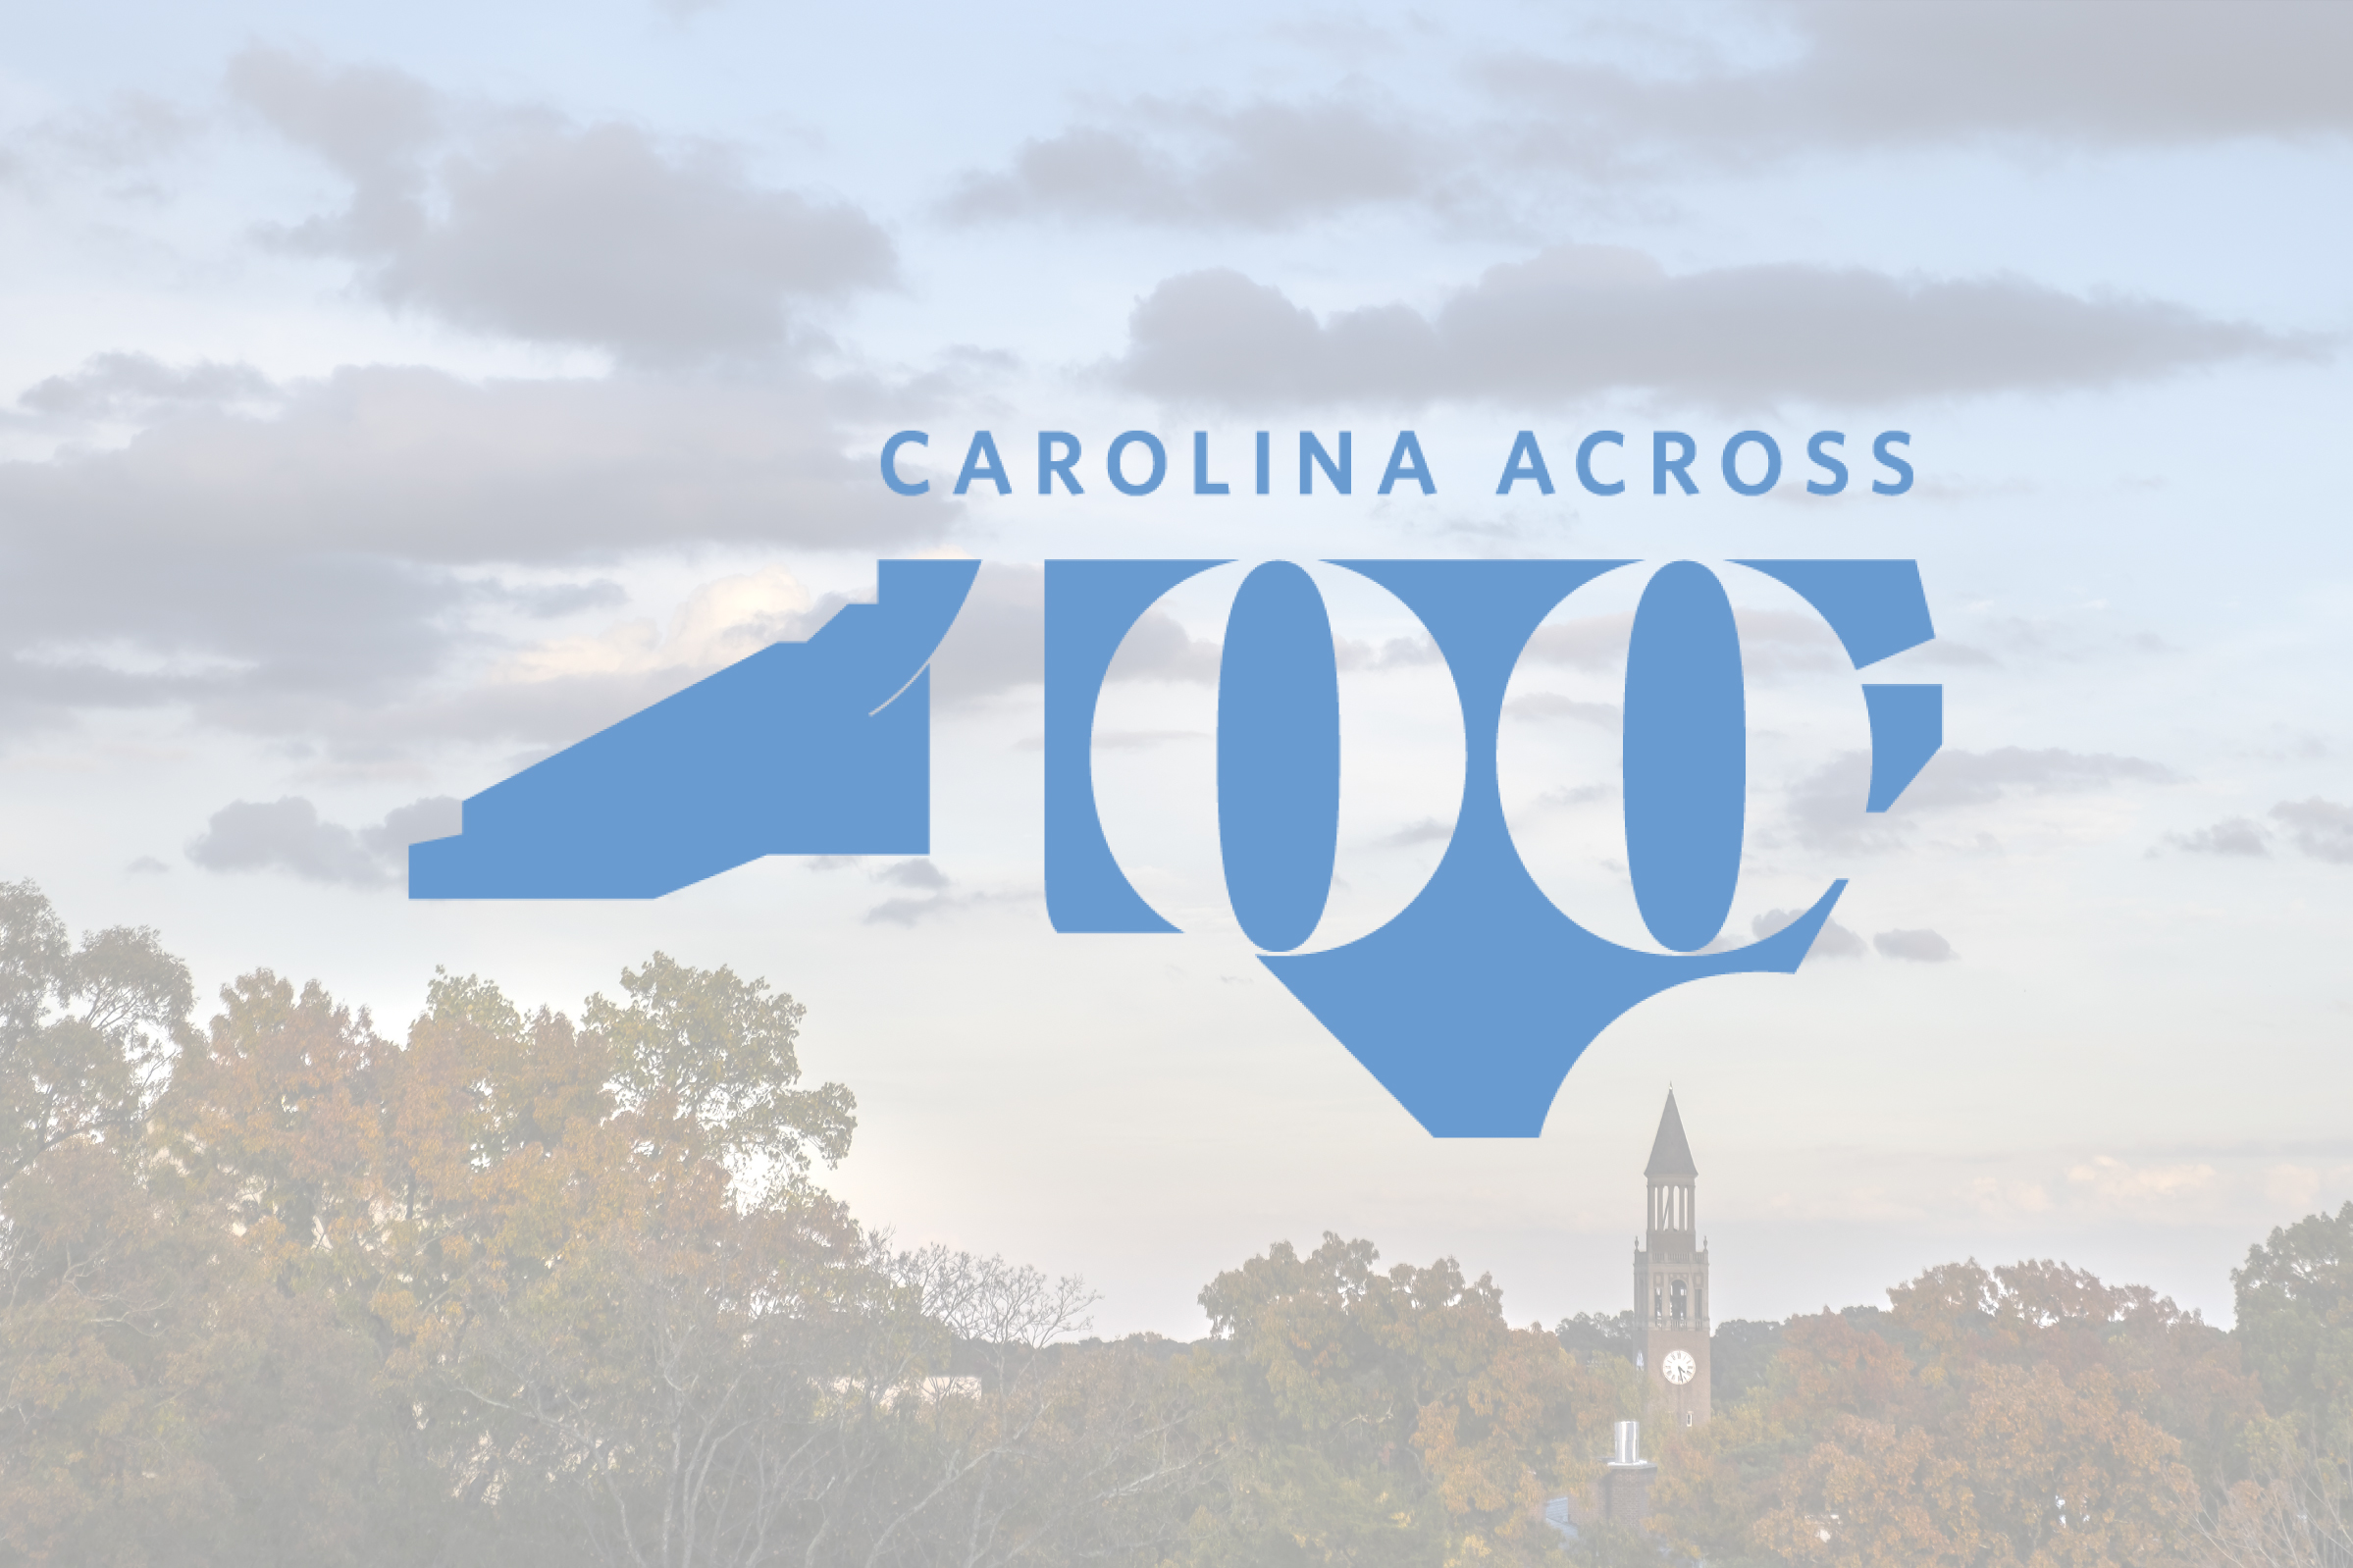 Carolina Across 100 logo set over a landscape shot featuring the clock tower.